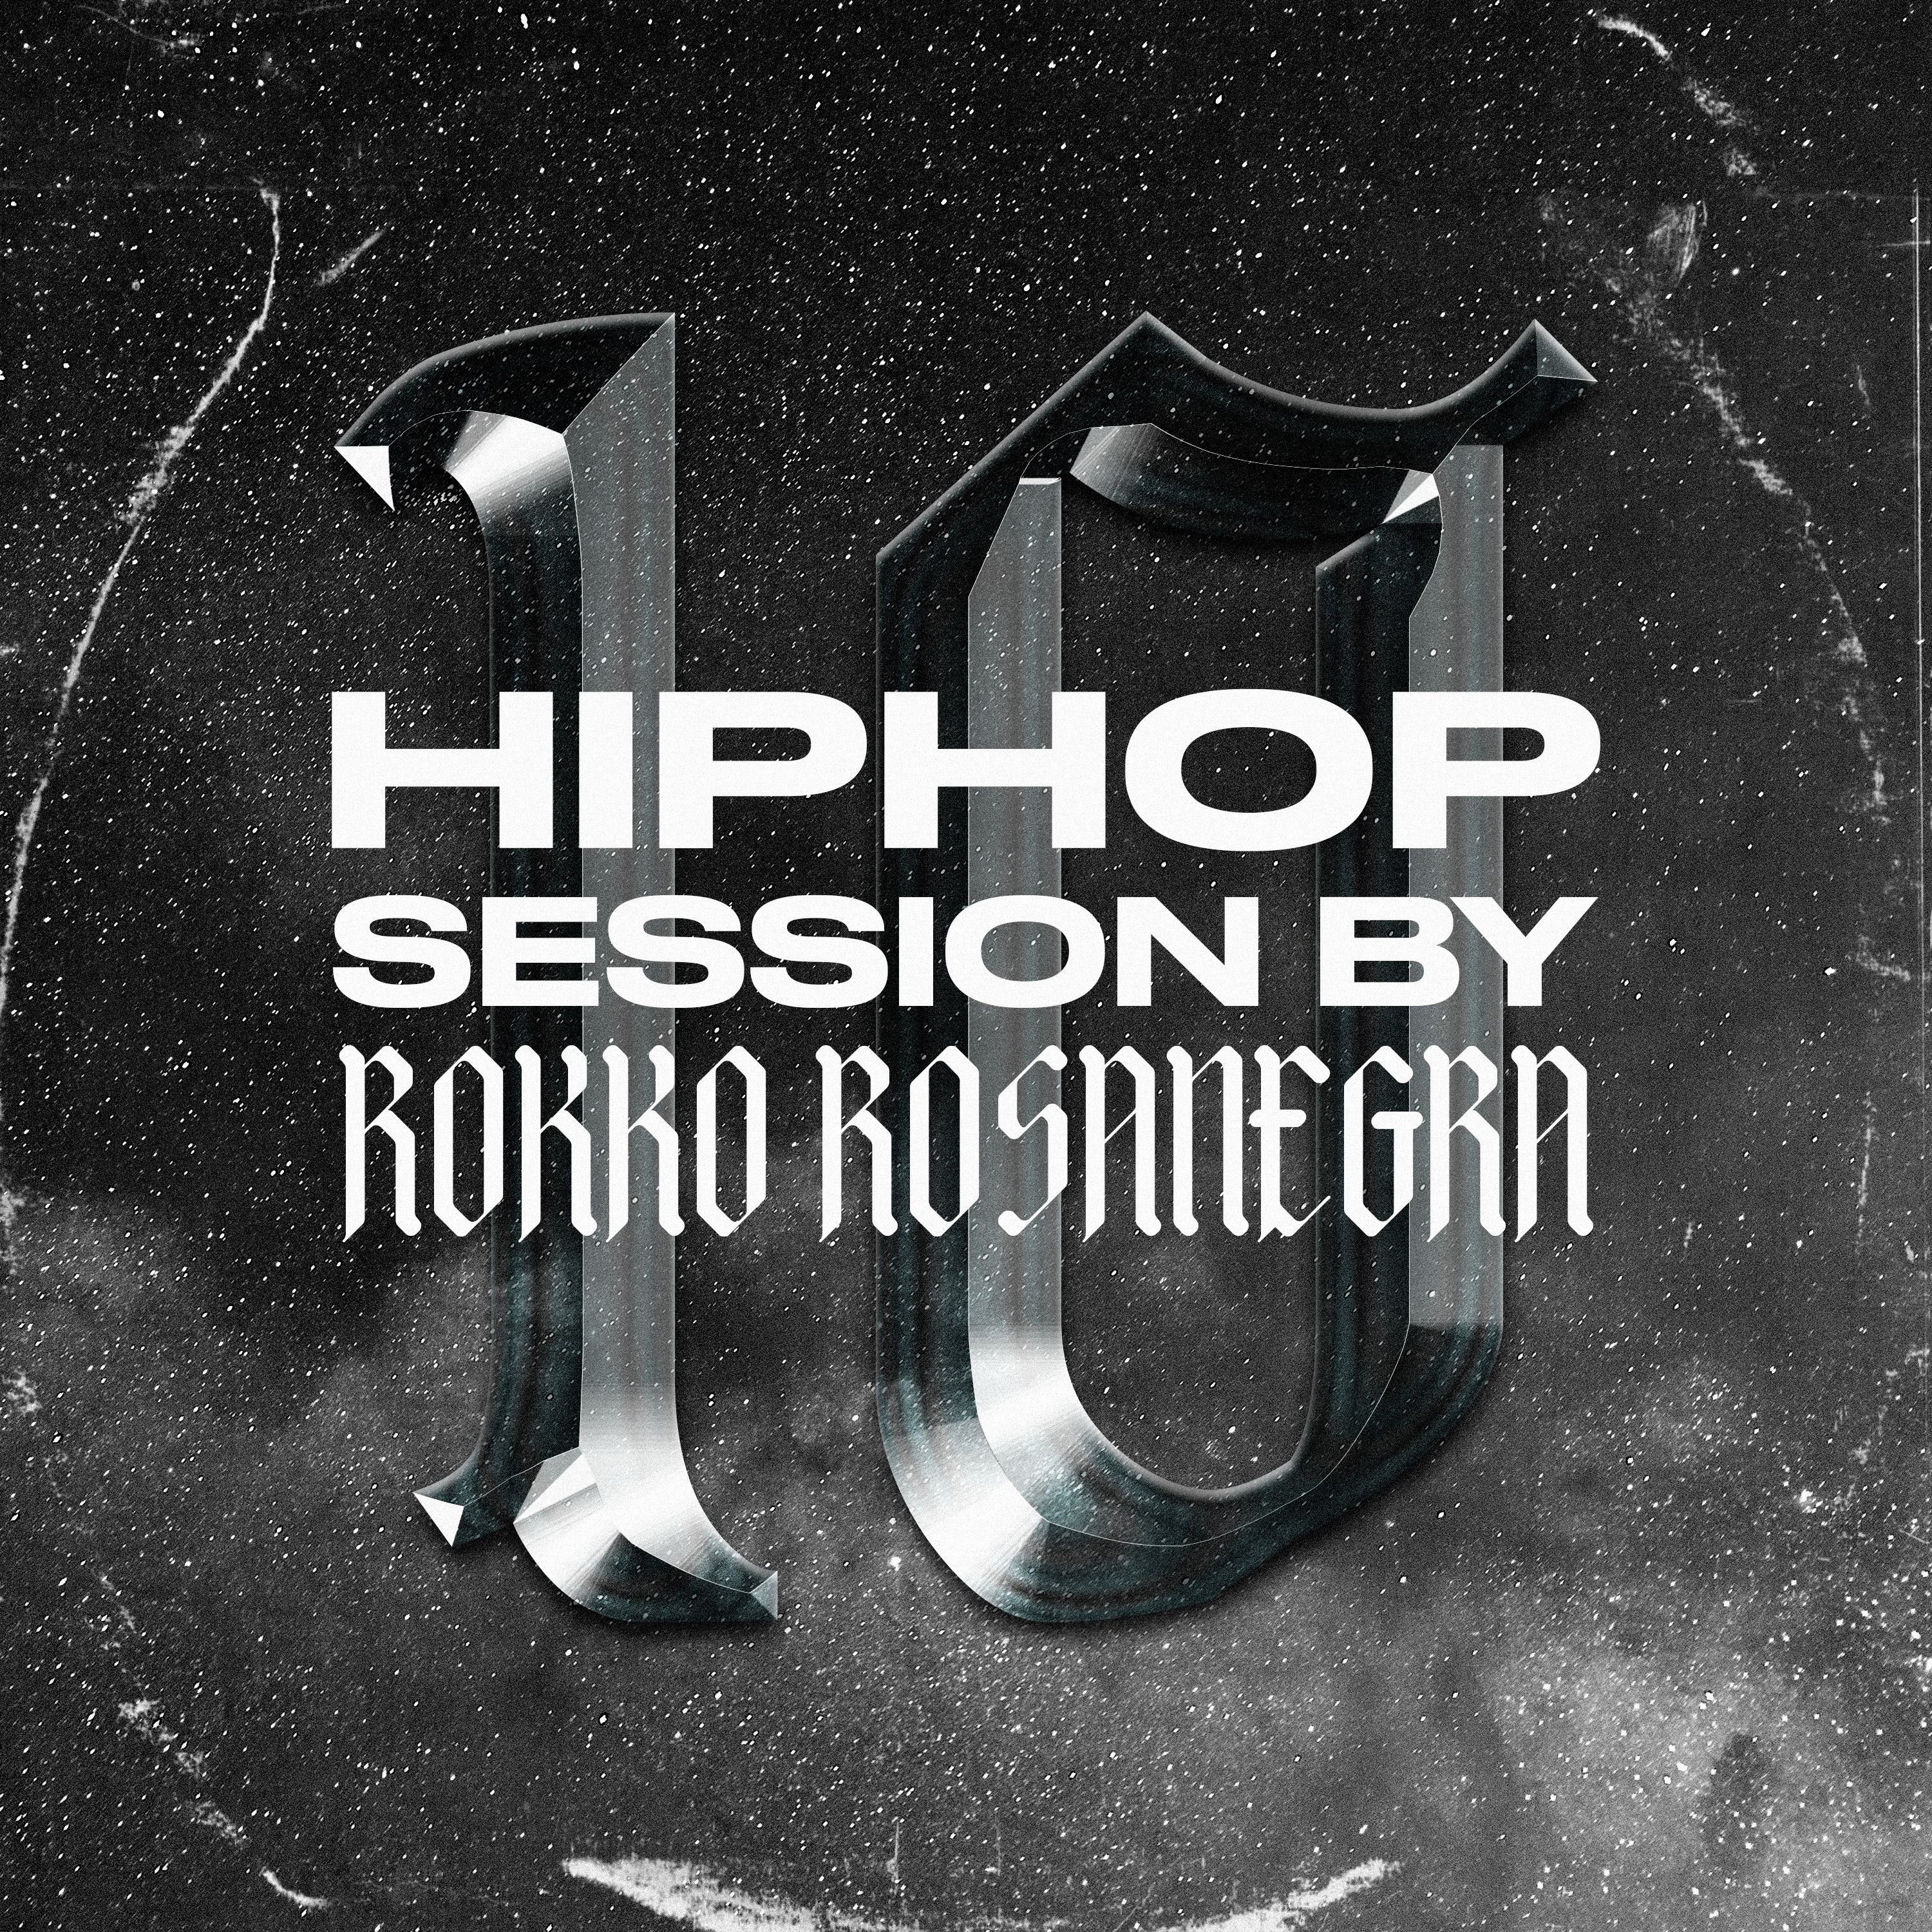 Tsitsani HIP HOP SESSION 10 (DJ ROKKO ROSANEGRA)